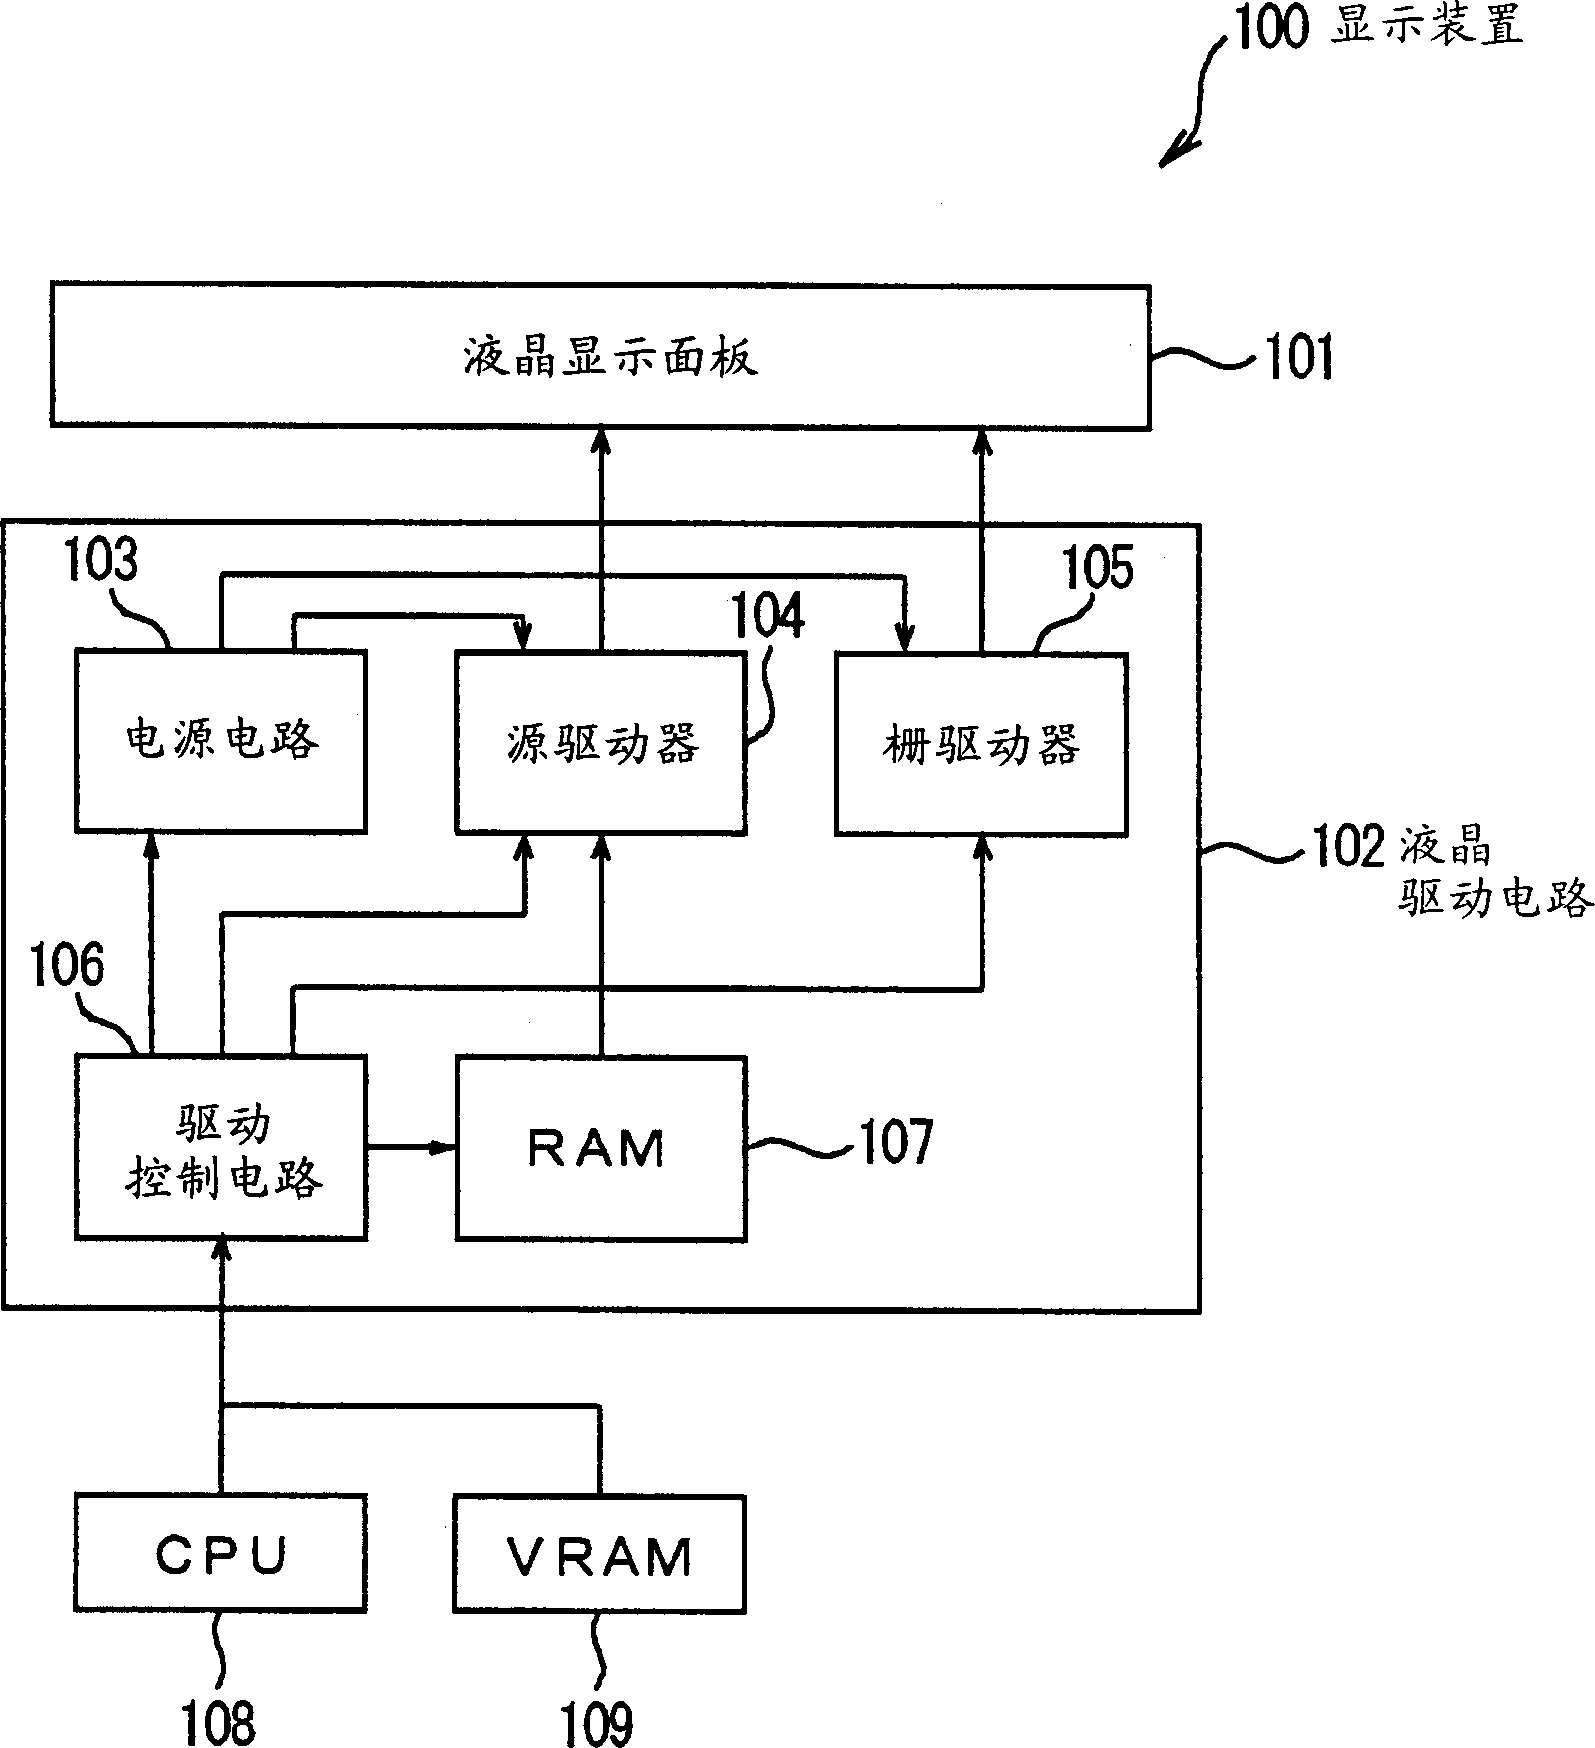 Gamma correction circuit, liquid crystal driving circuit, display and power supply circuit